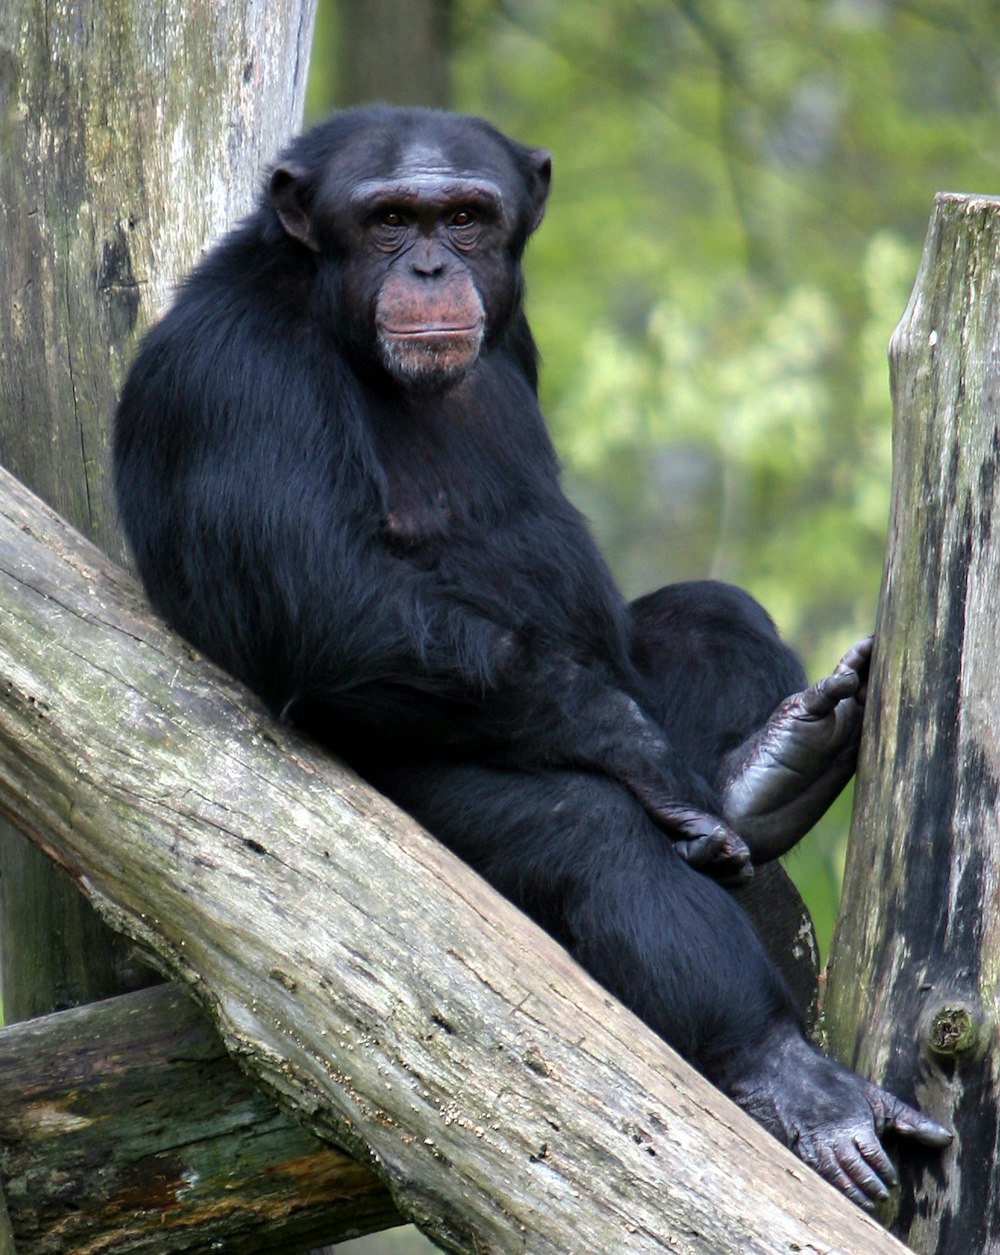 a black monkey sitting on a tree branch